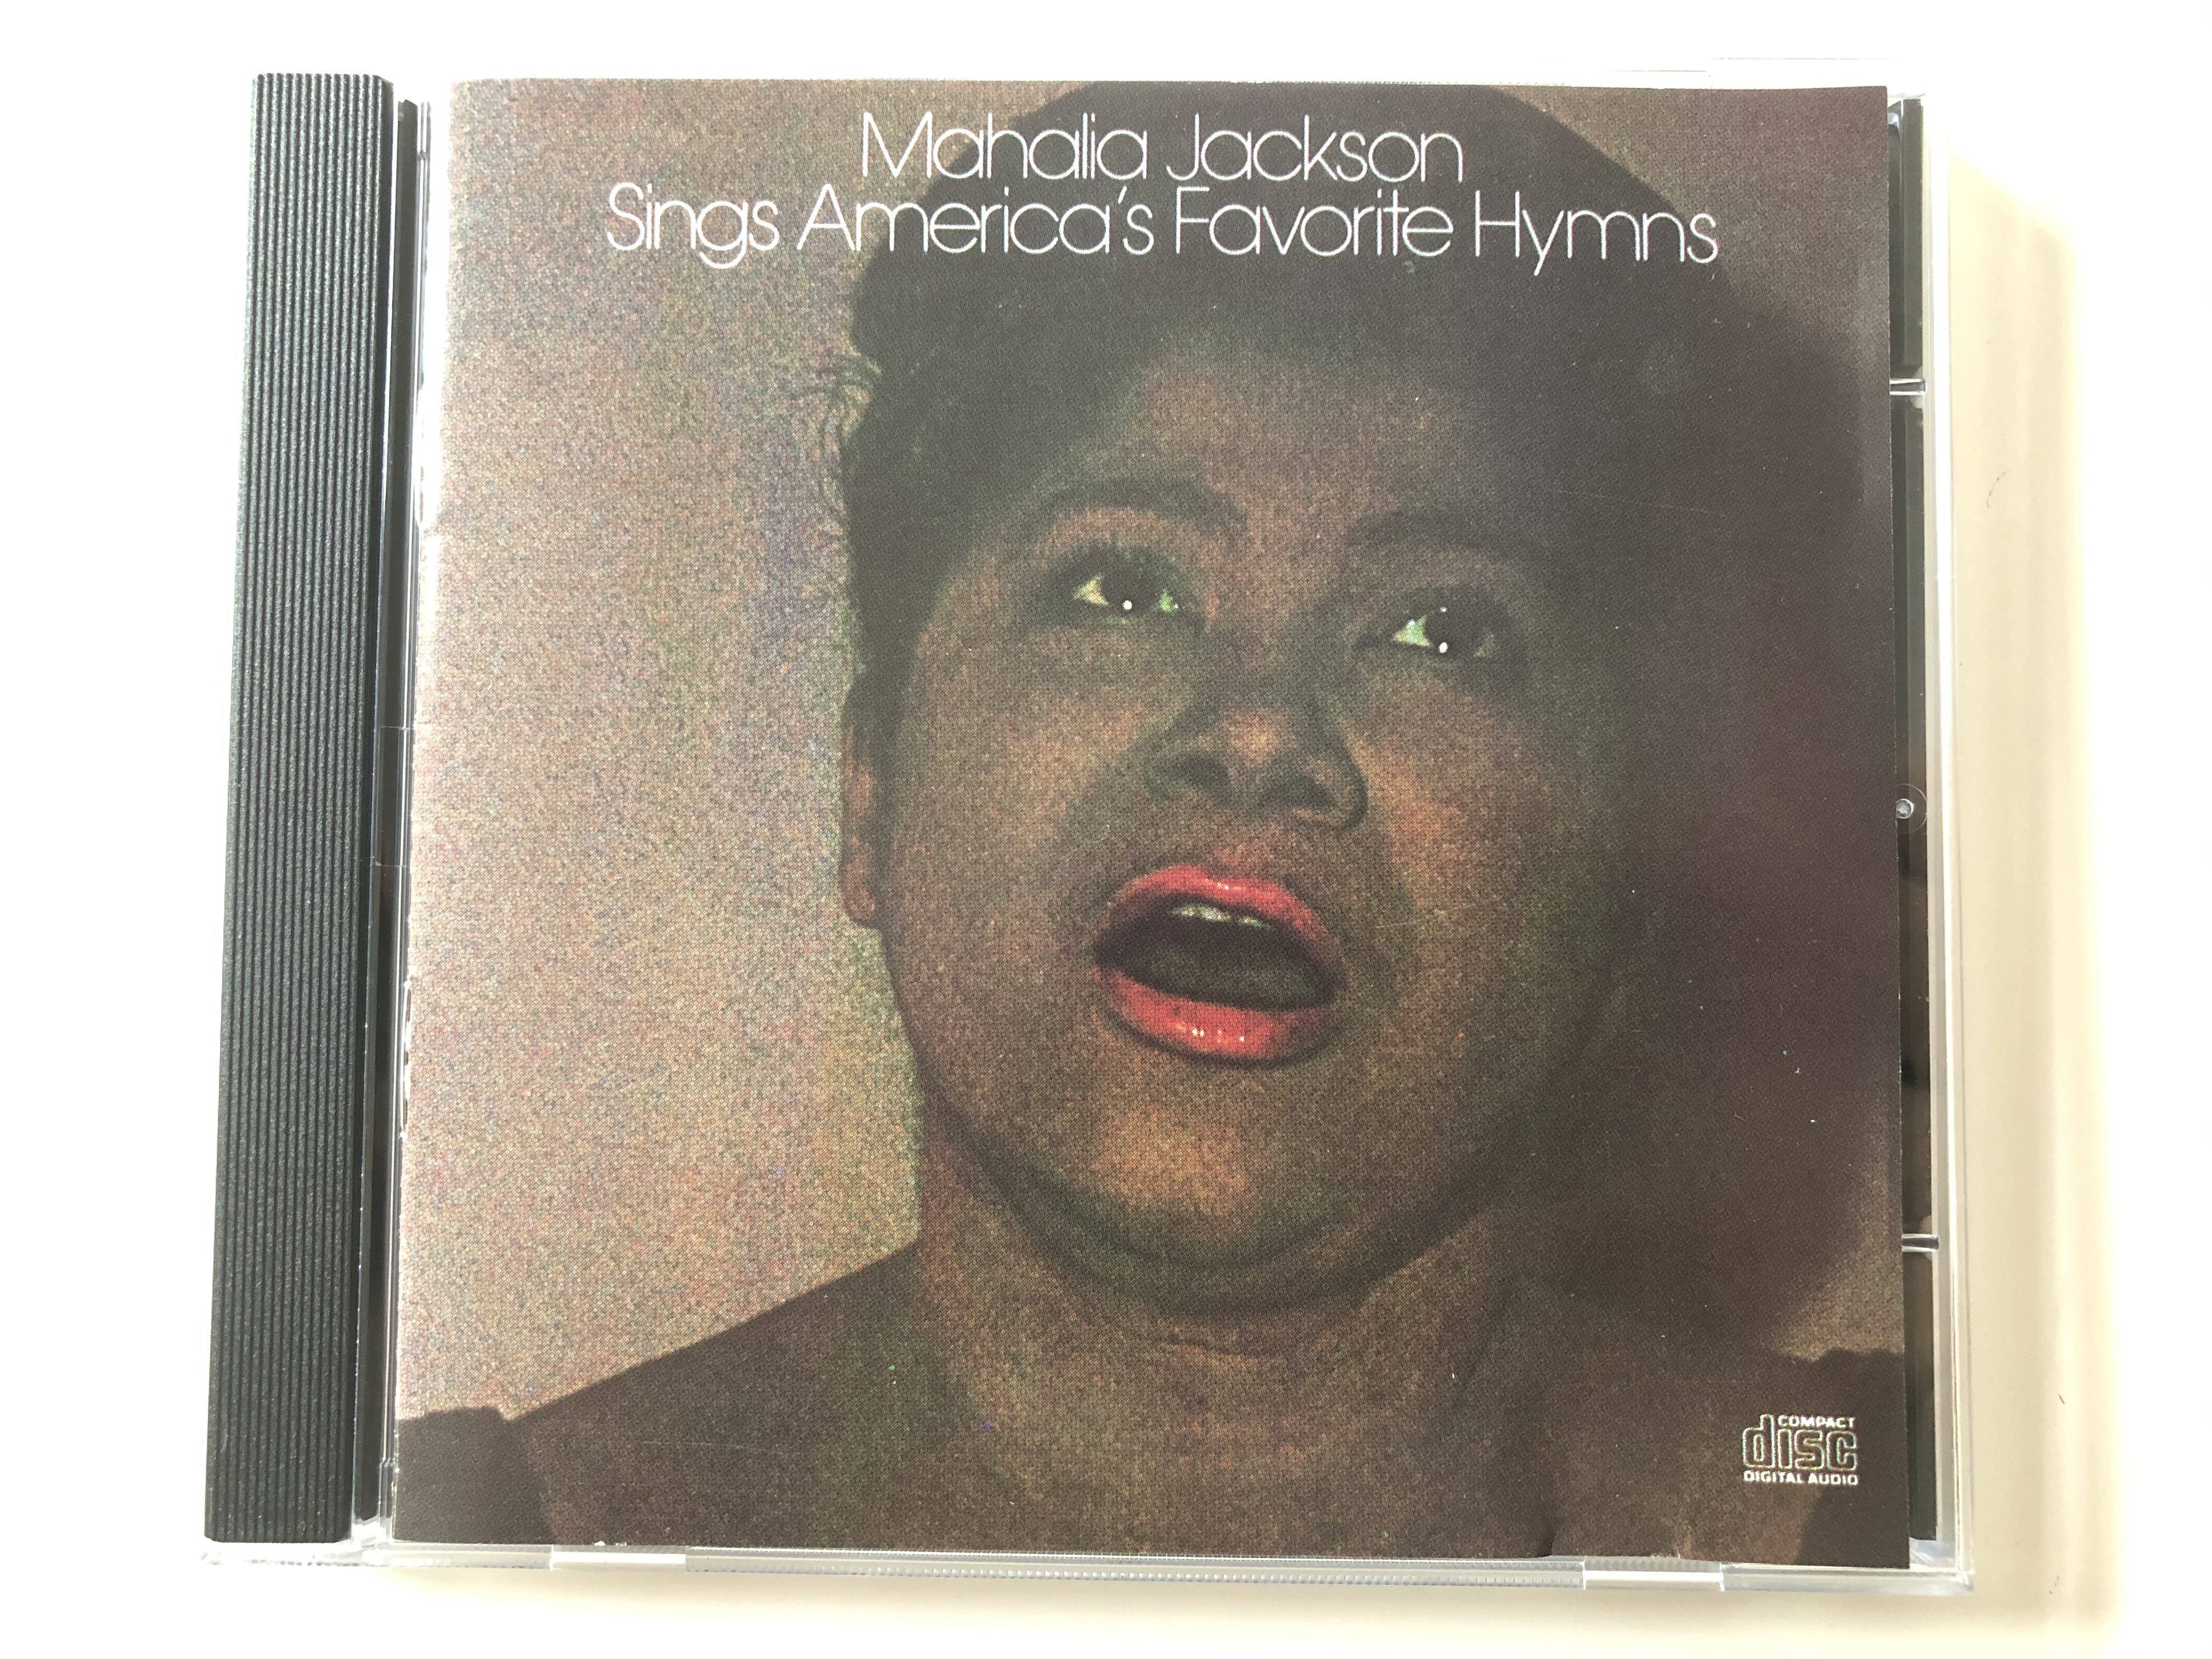 mahalia-jackson-sings-america-s-favourite-hymns-columbia-audio-cd-cgk-30744-1-.jpg